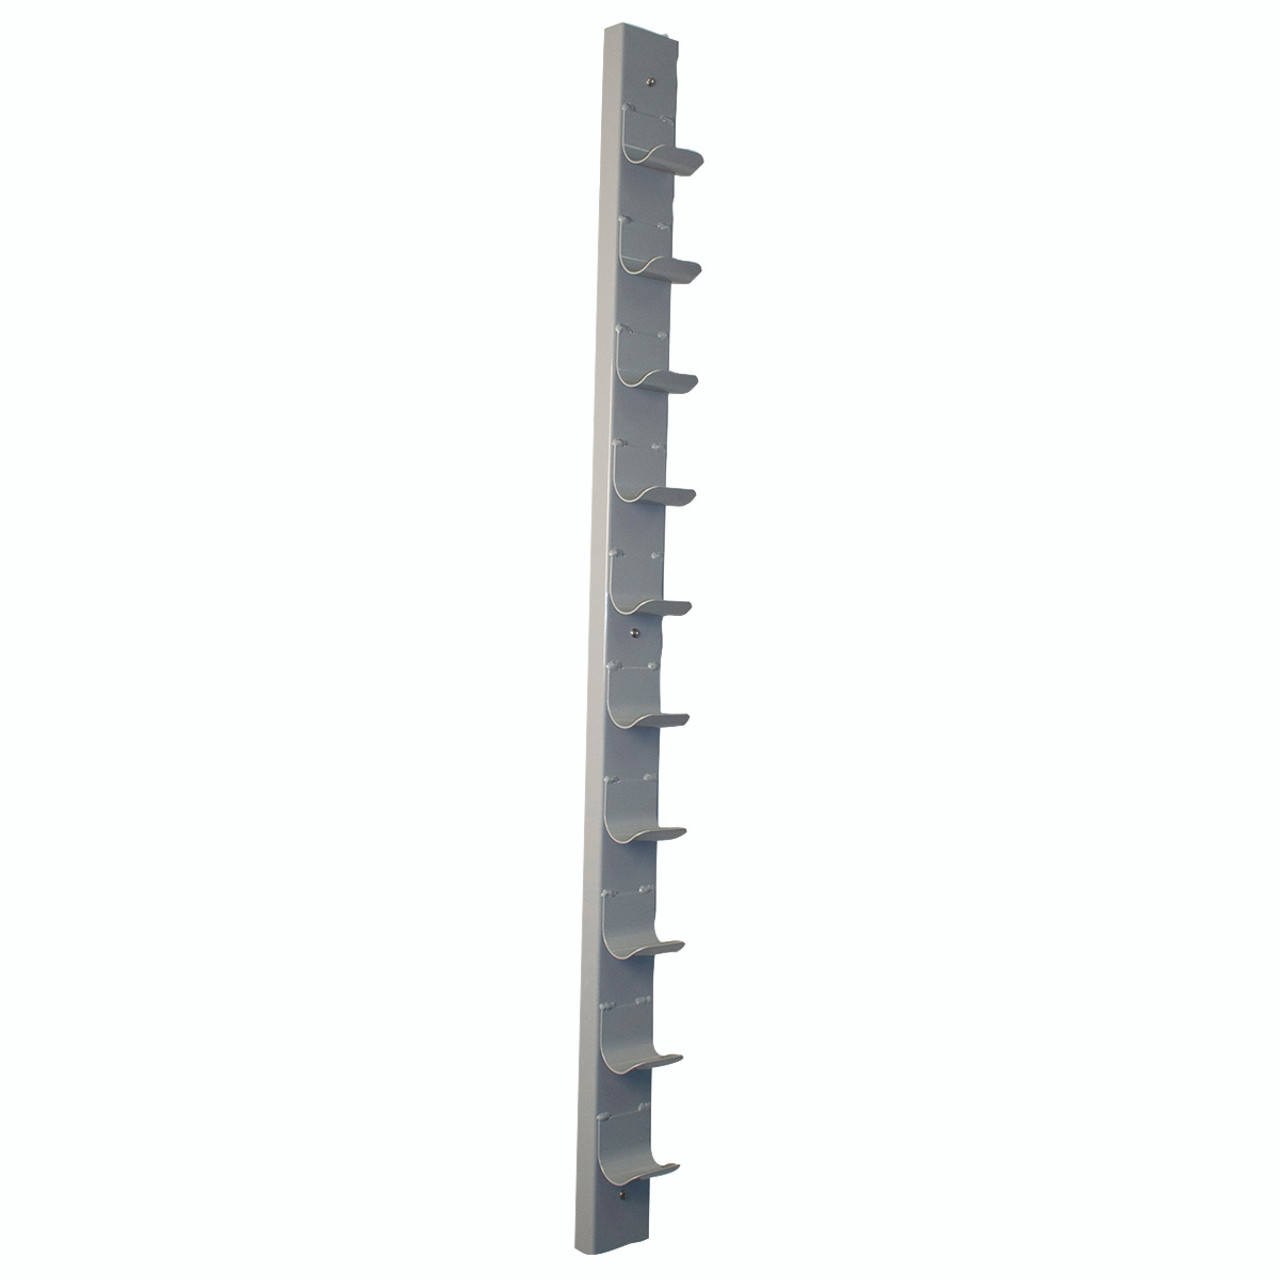 CanDo¨ Dumbbell - Wall Rack - 10 Dumbbell Capacity